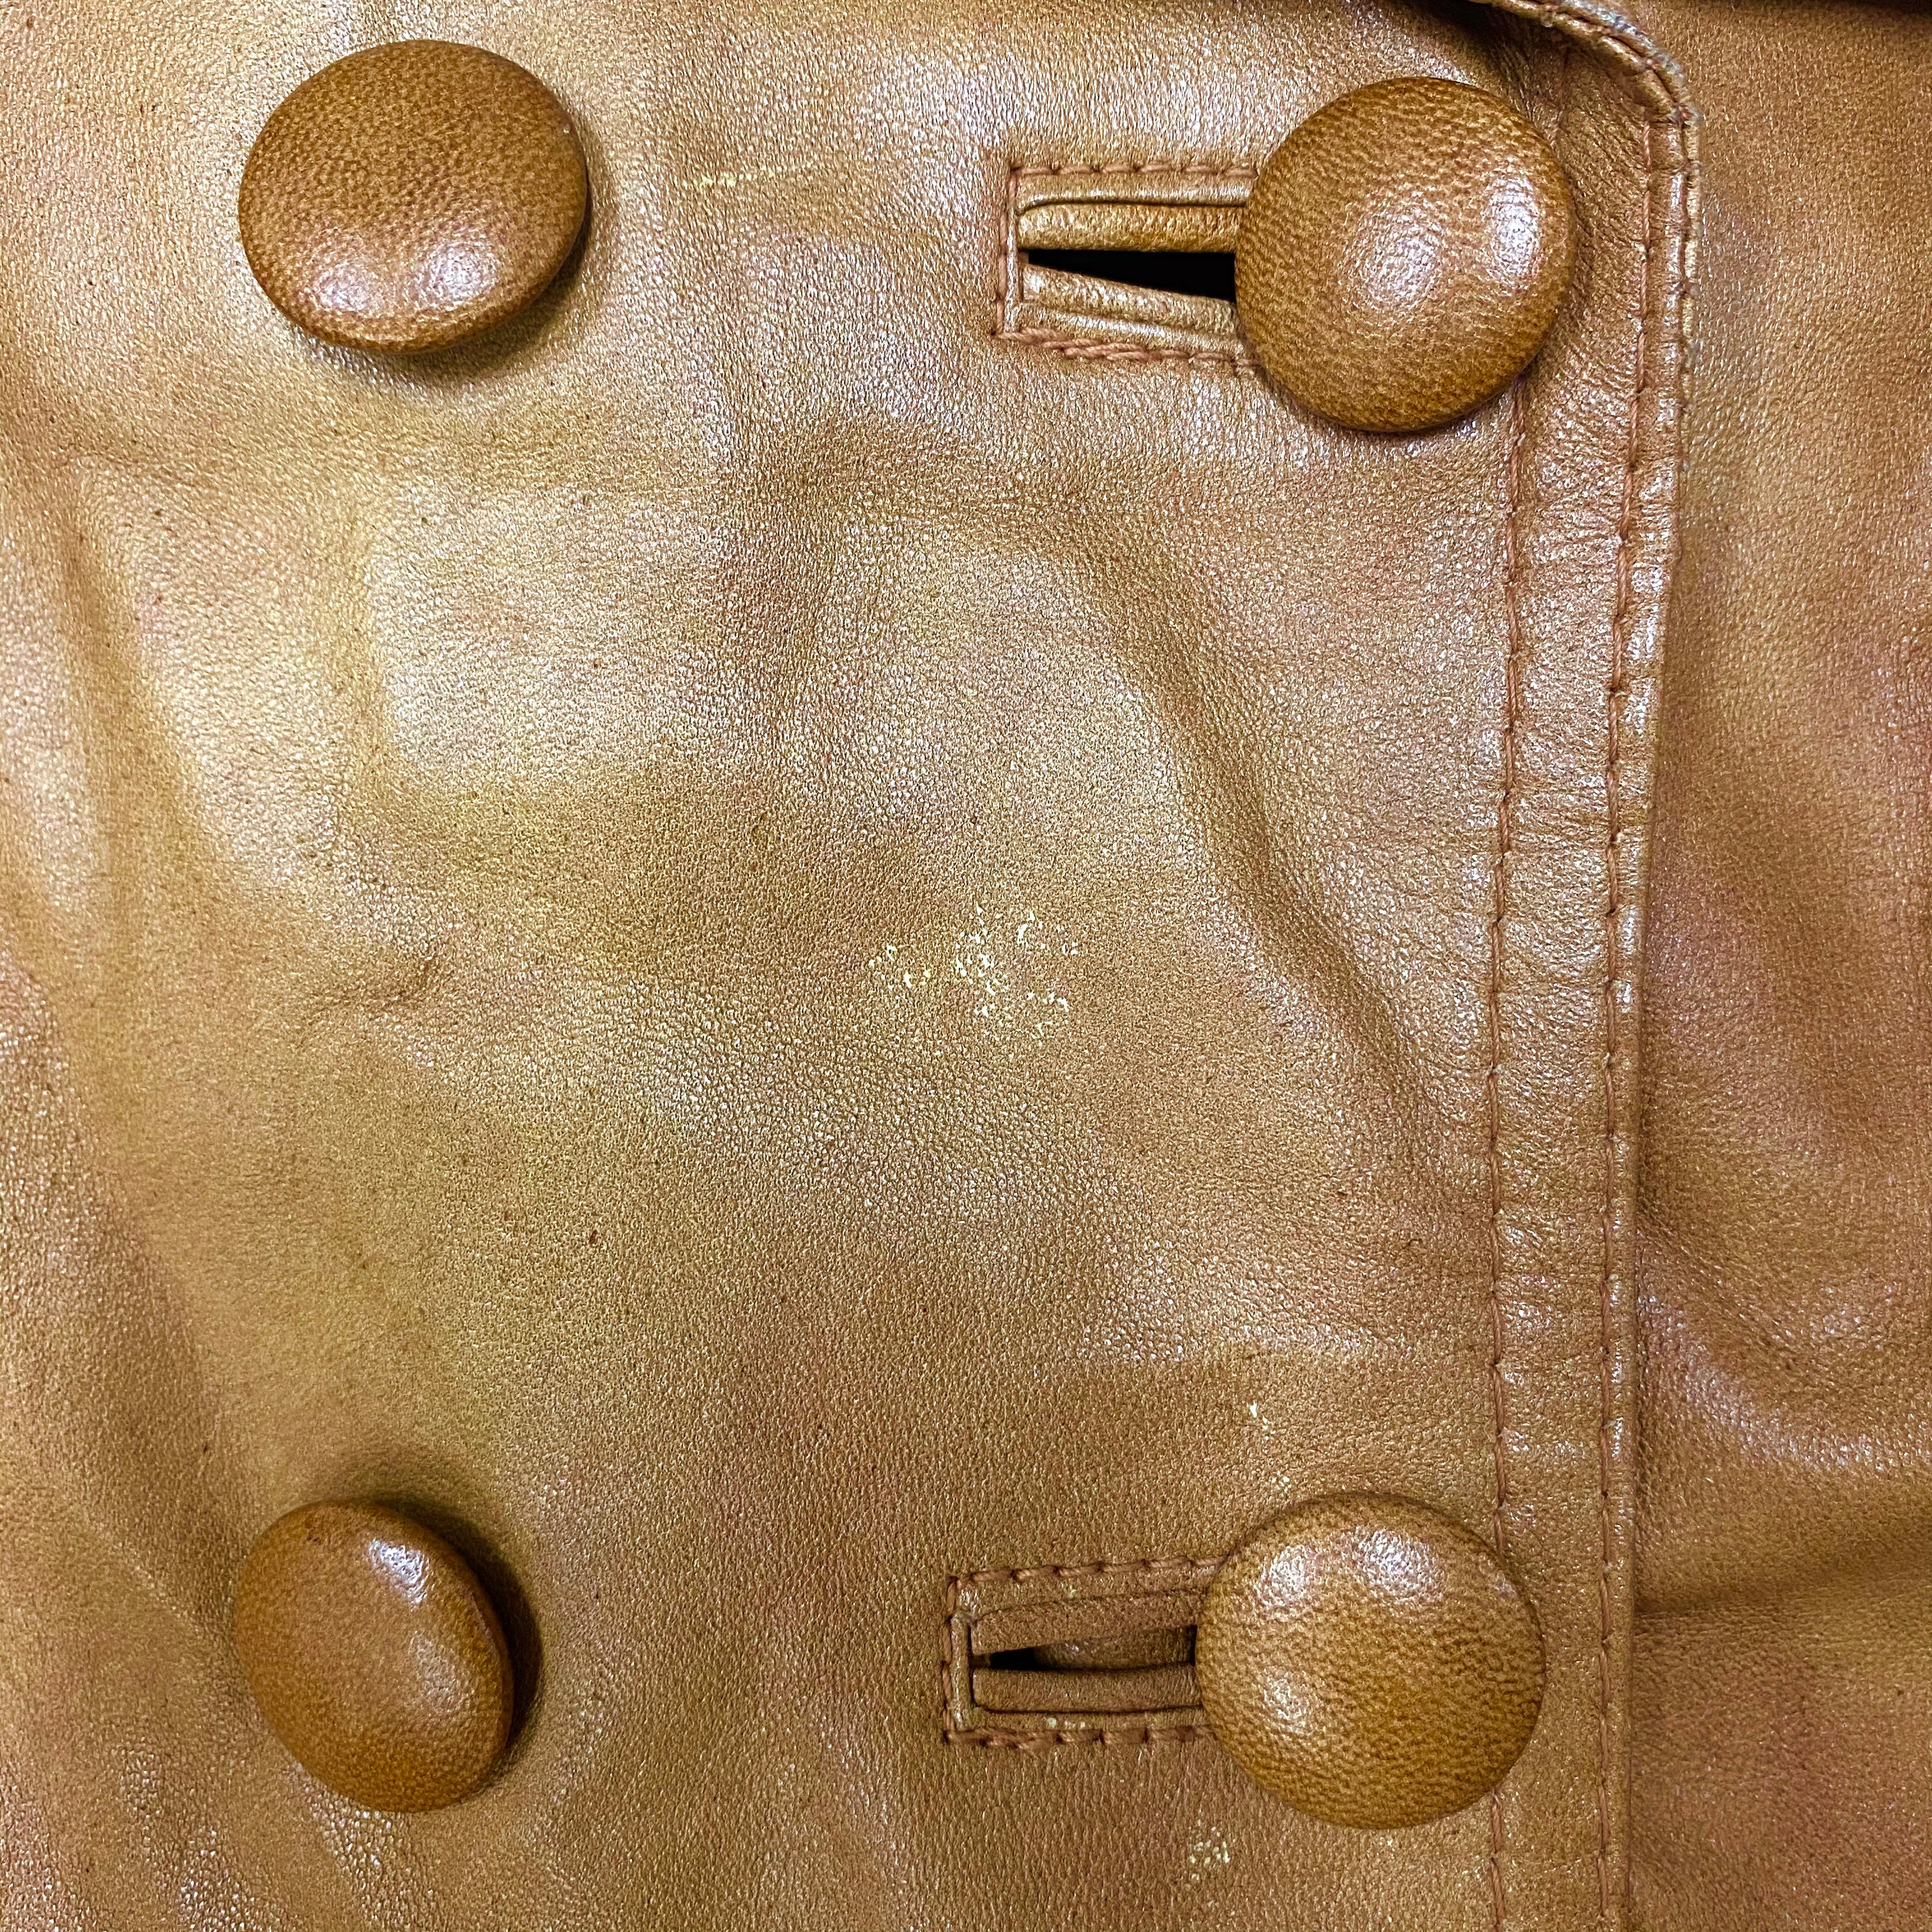 Dersan Brown Leather Coat